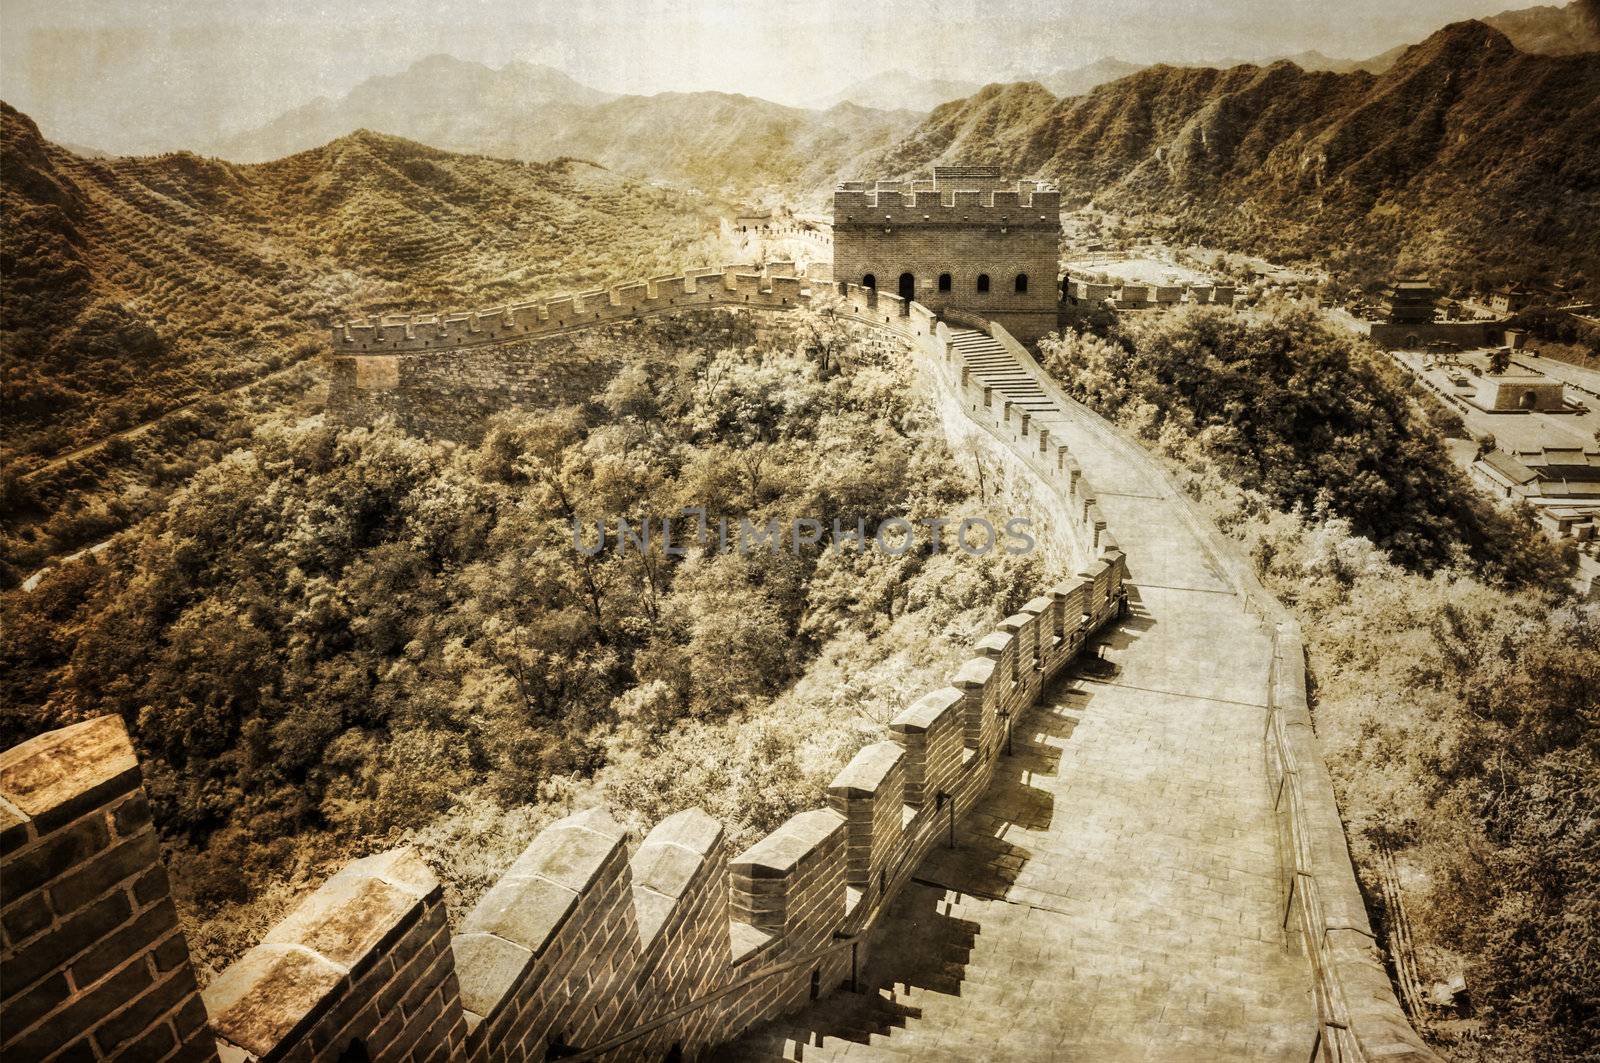 Great wall of China vintage retro view, China